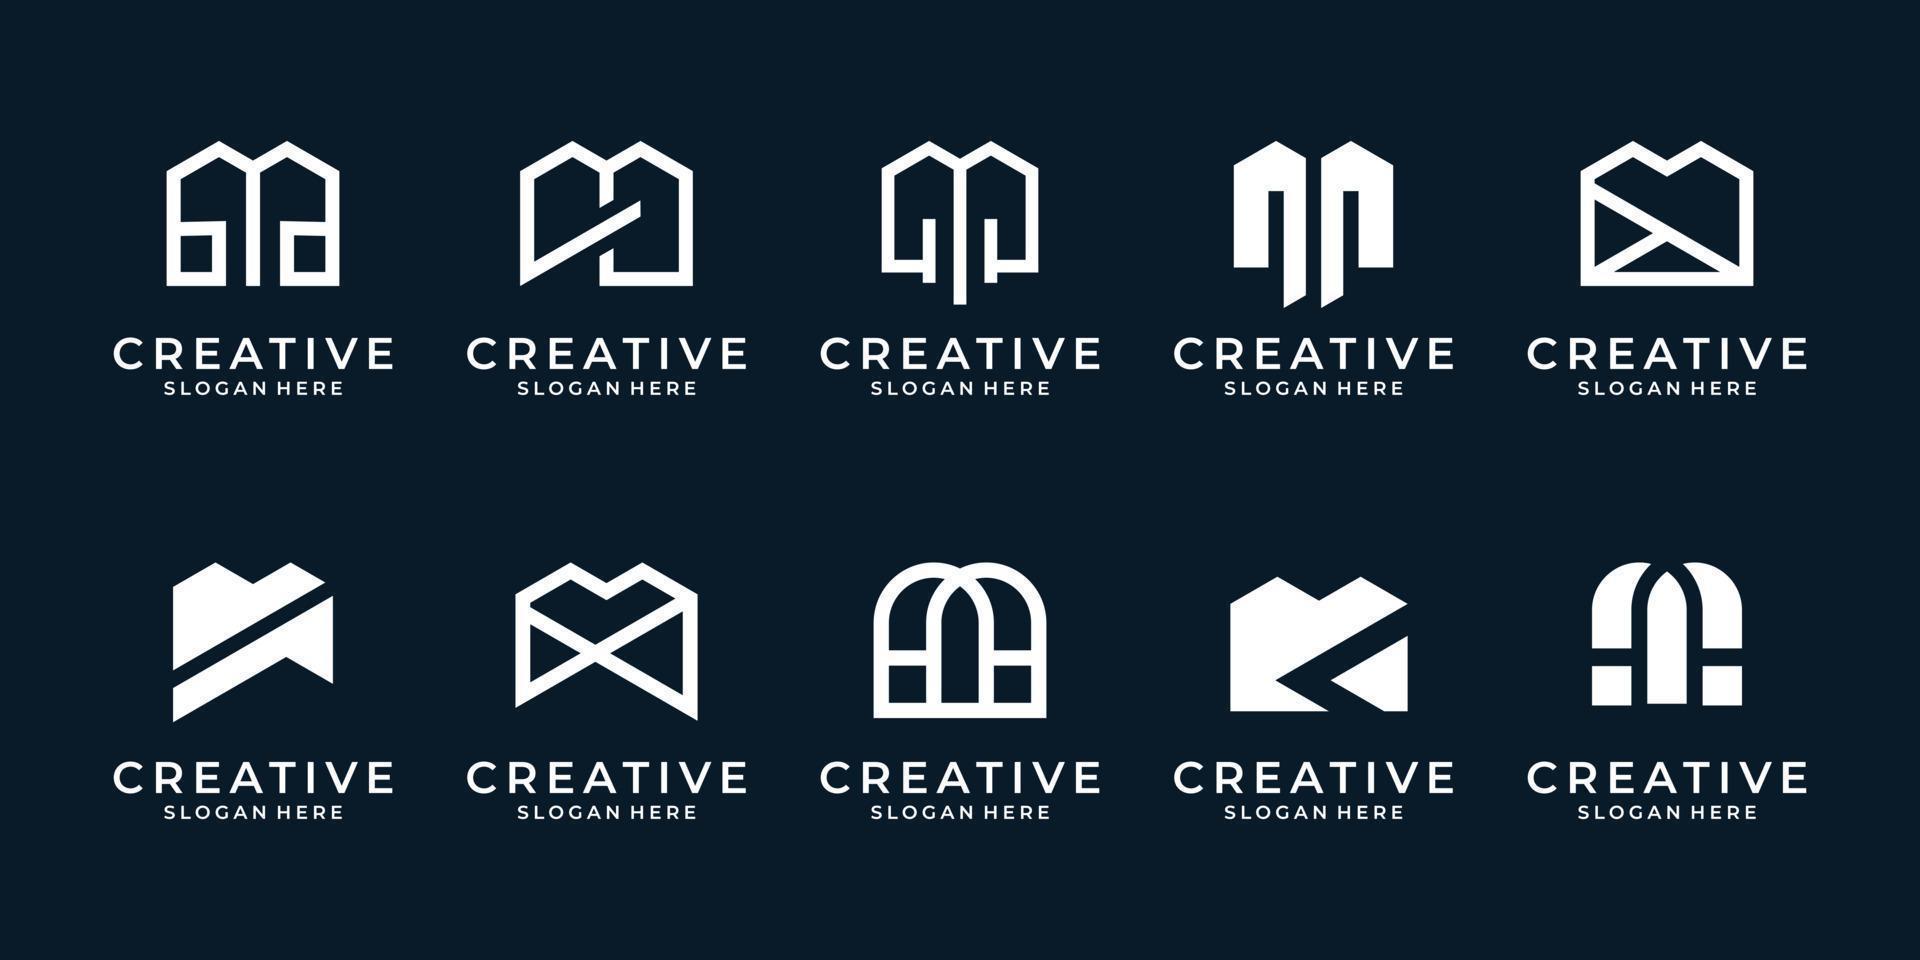 conjunto de modelo de logotipo abstrato letra m. ícone criativo com estilo plano e minimalista. vetor